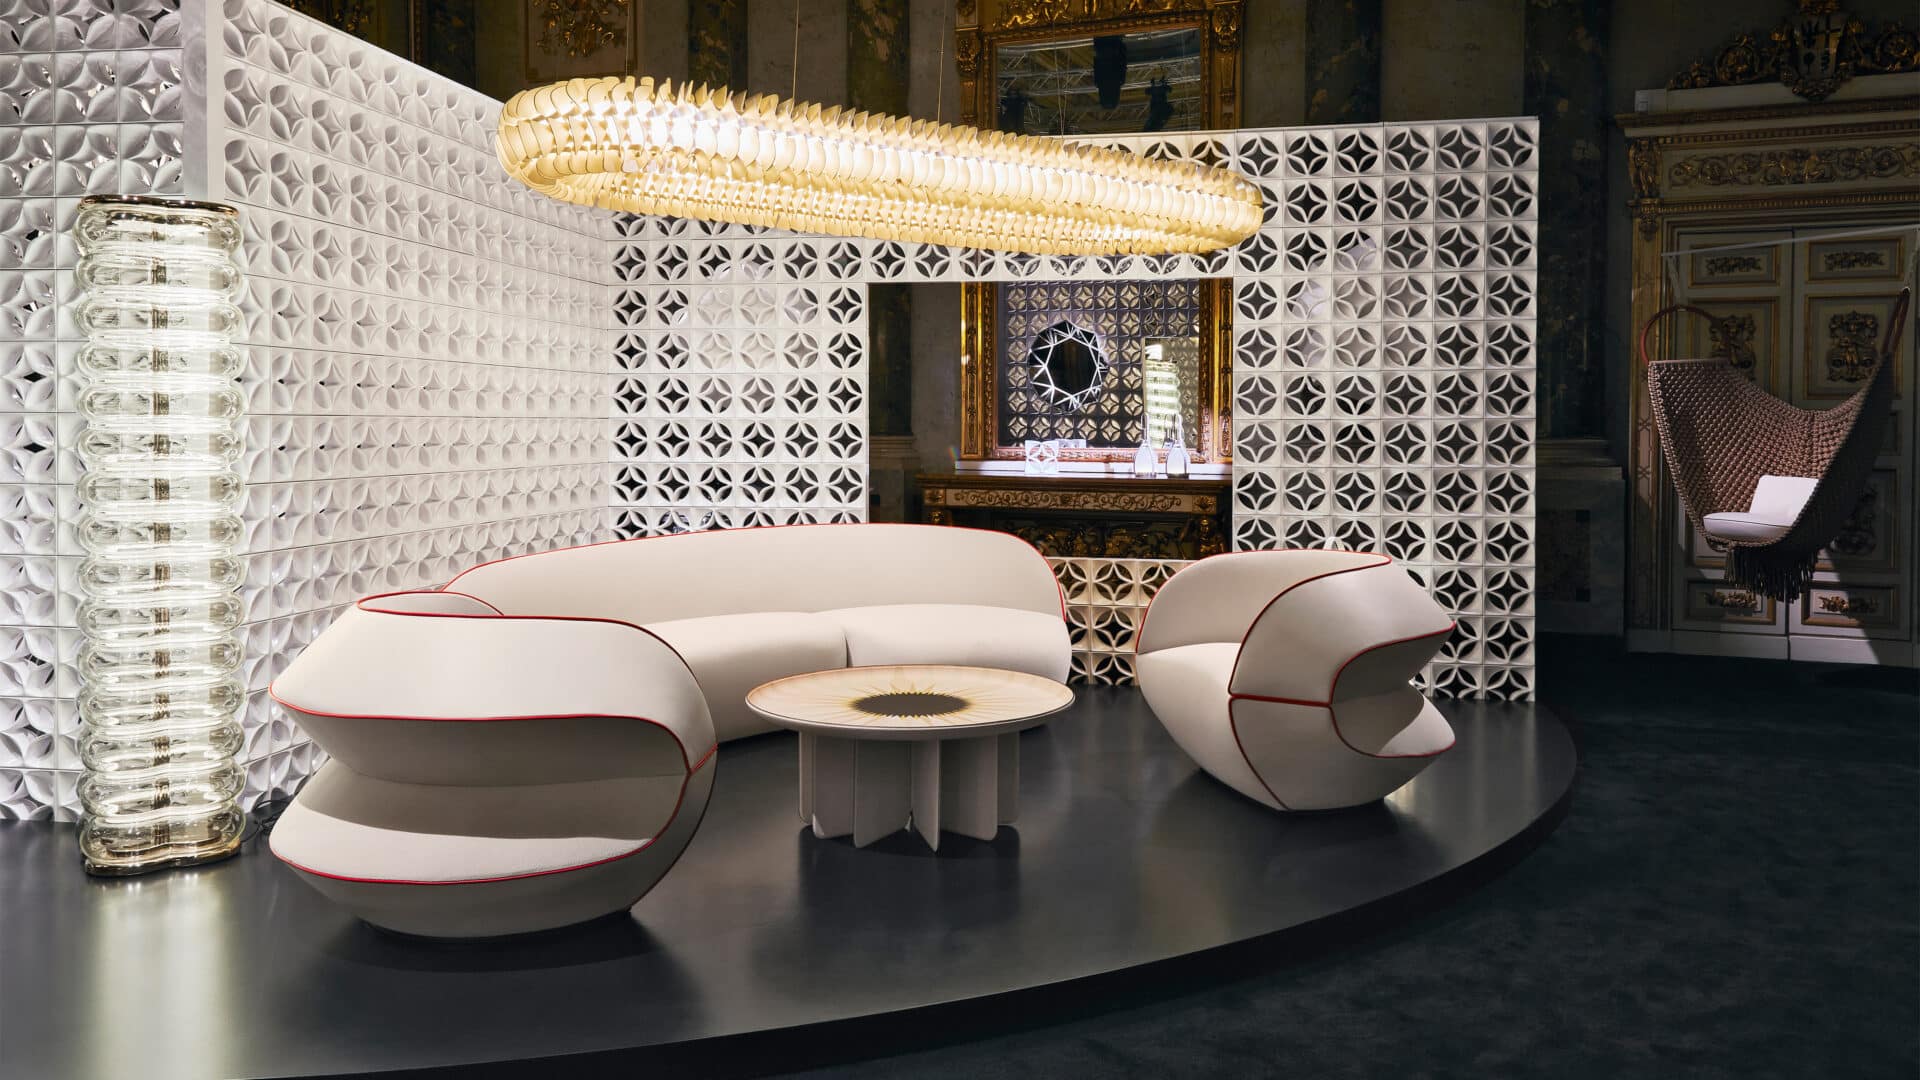 Louis Vuitton Objets Nomades Salone del Mobile 2023 Design Week